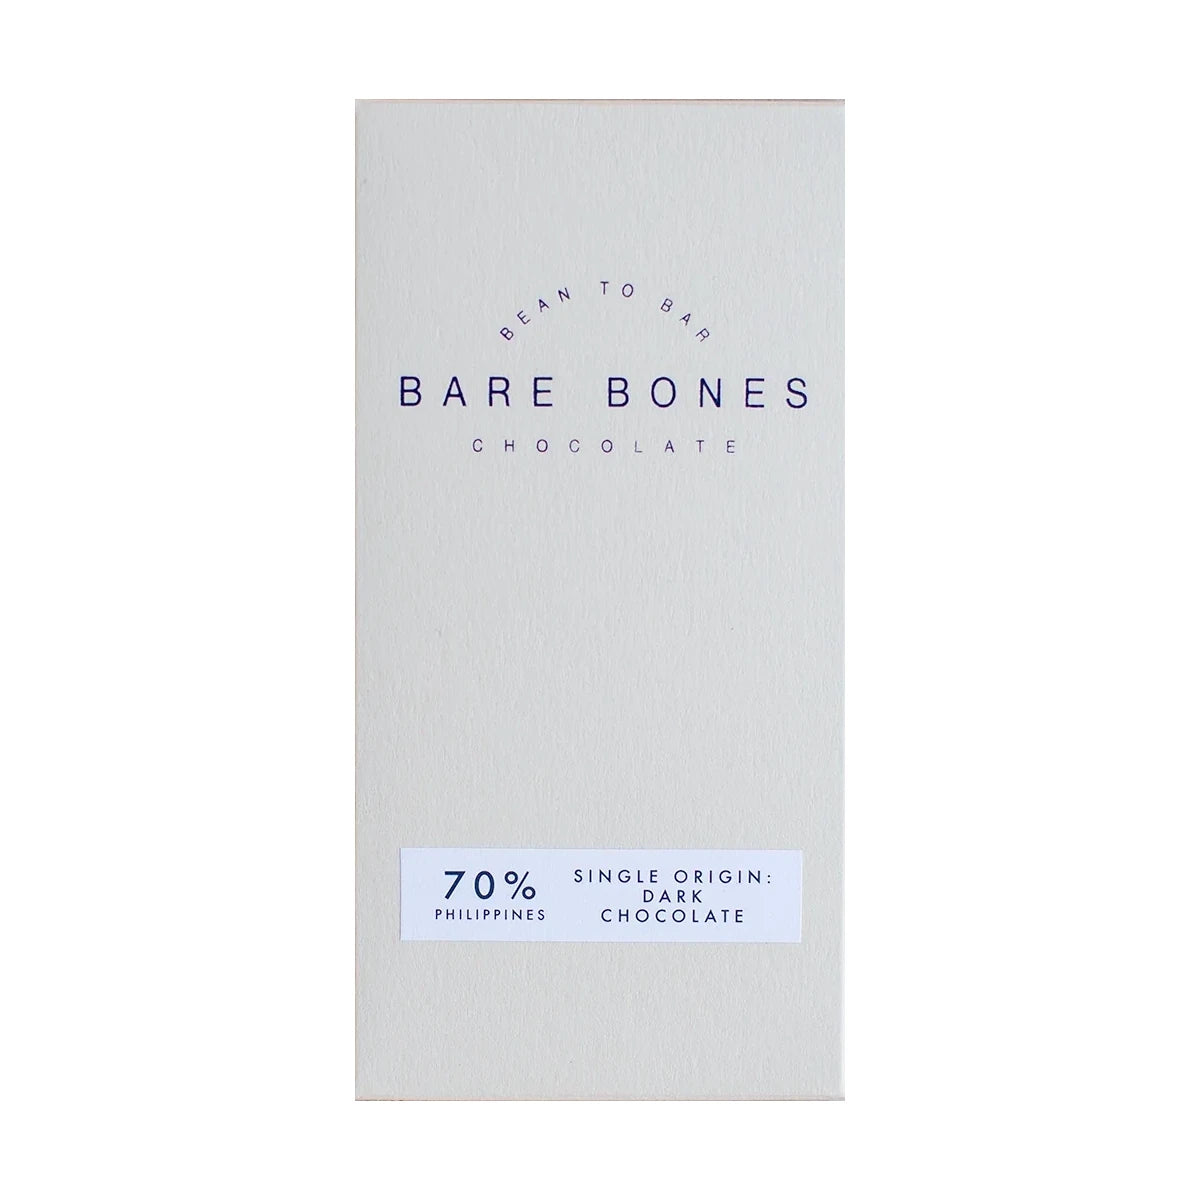 Ltd Edition - Philippines 70% Dark Chocolate | 70g | by Bare Bones - Lifestory 